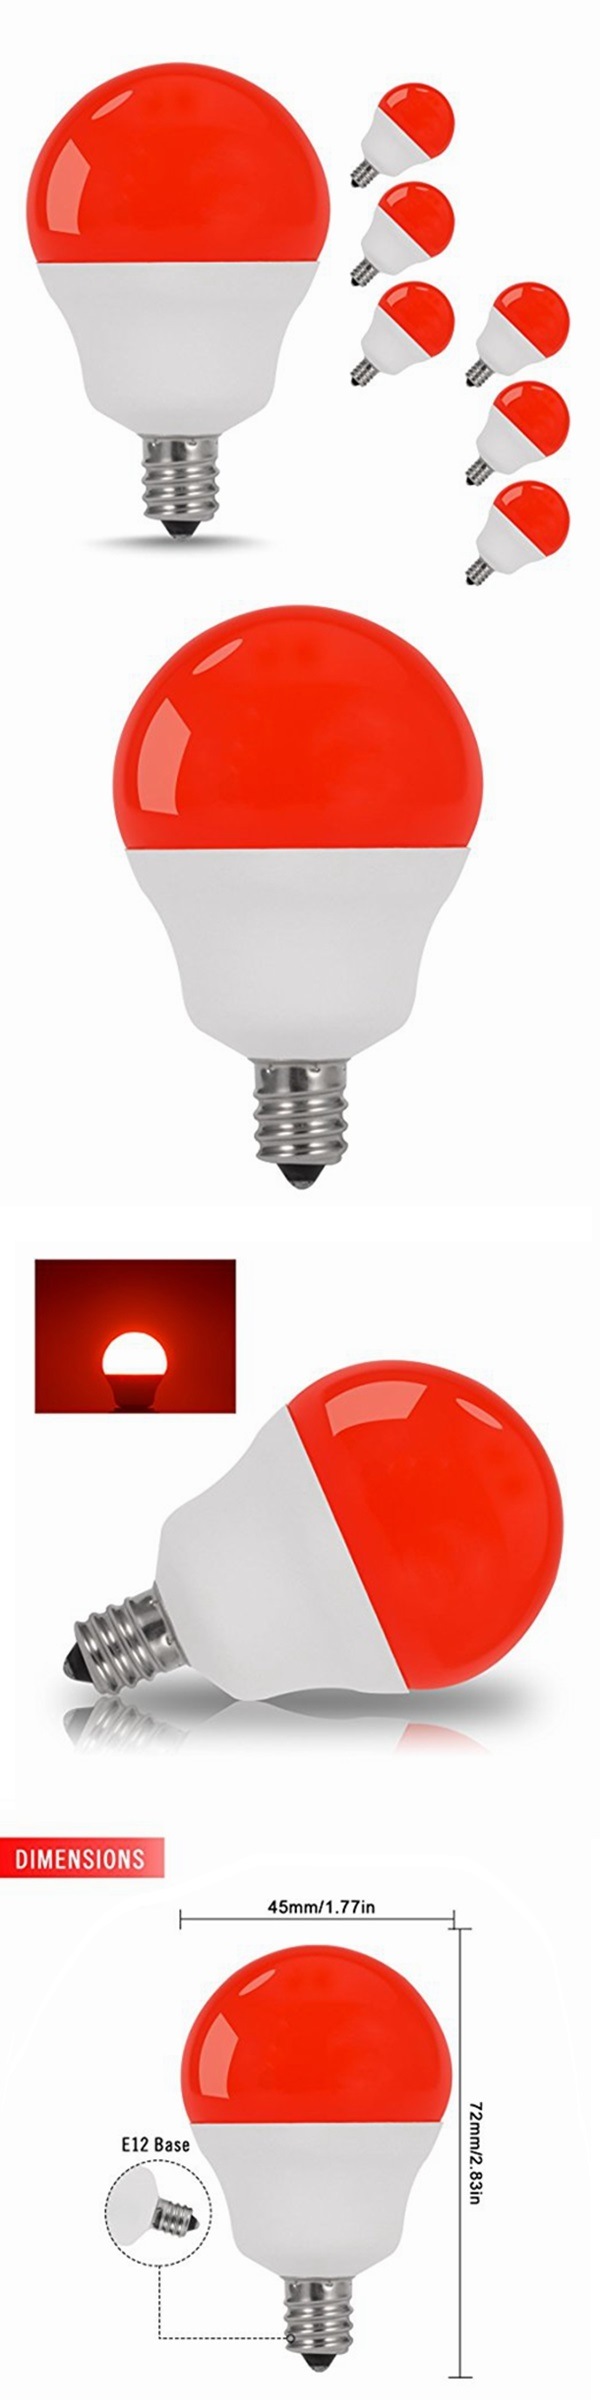 New Arrival G14 Decoration Light Red Light Bulbs 5W 40W Equivalent E12 LED Bulb